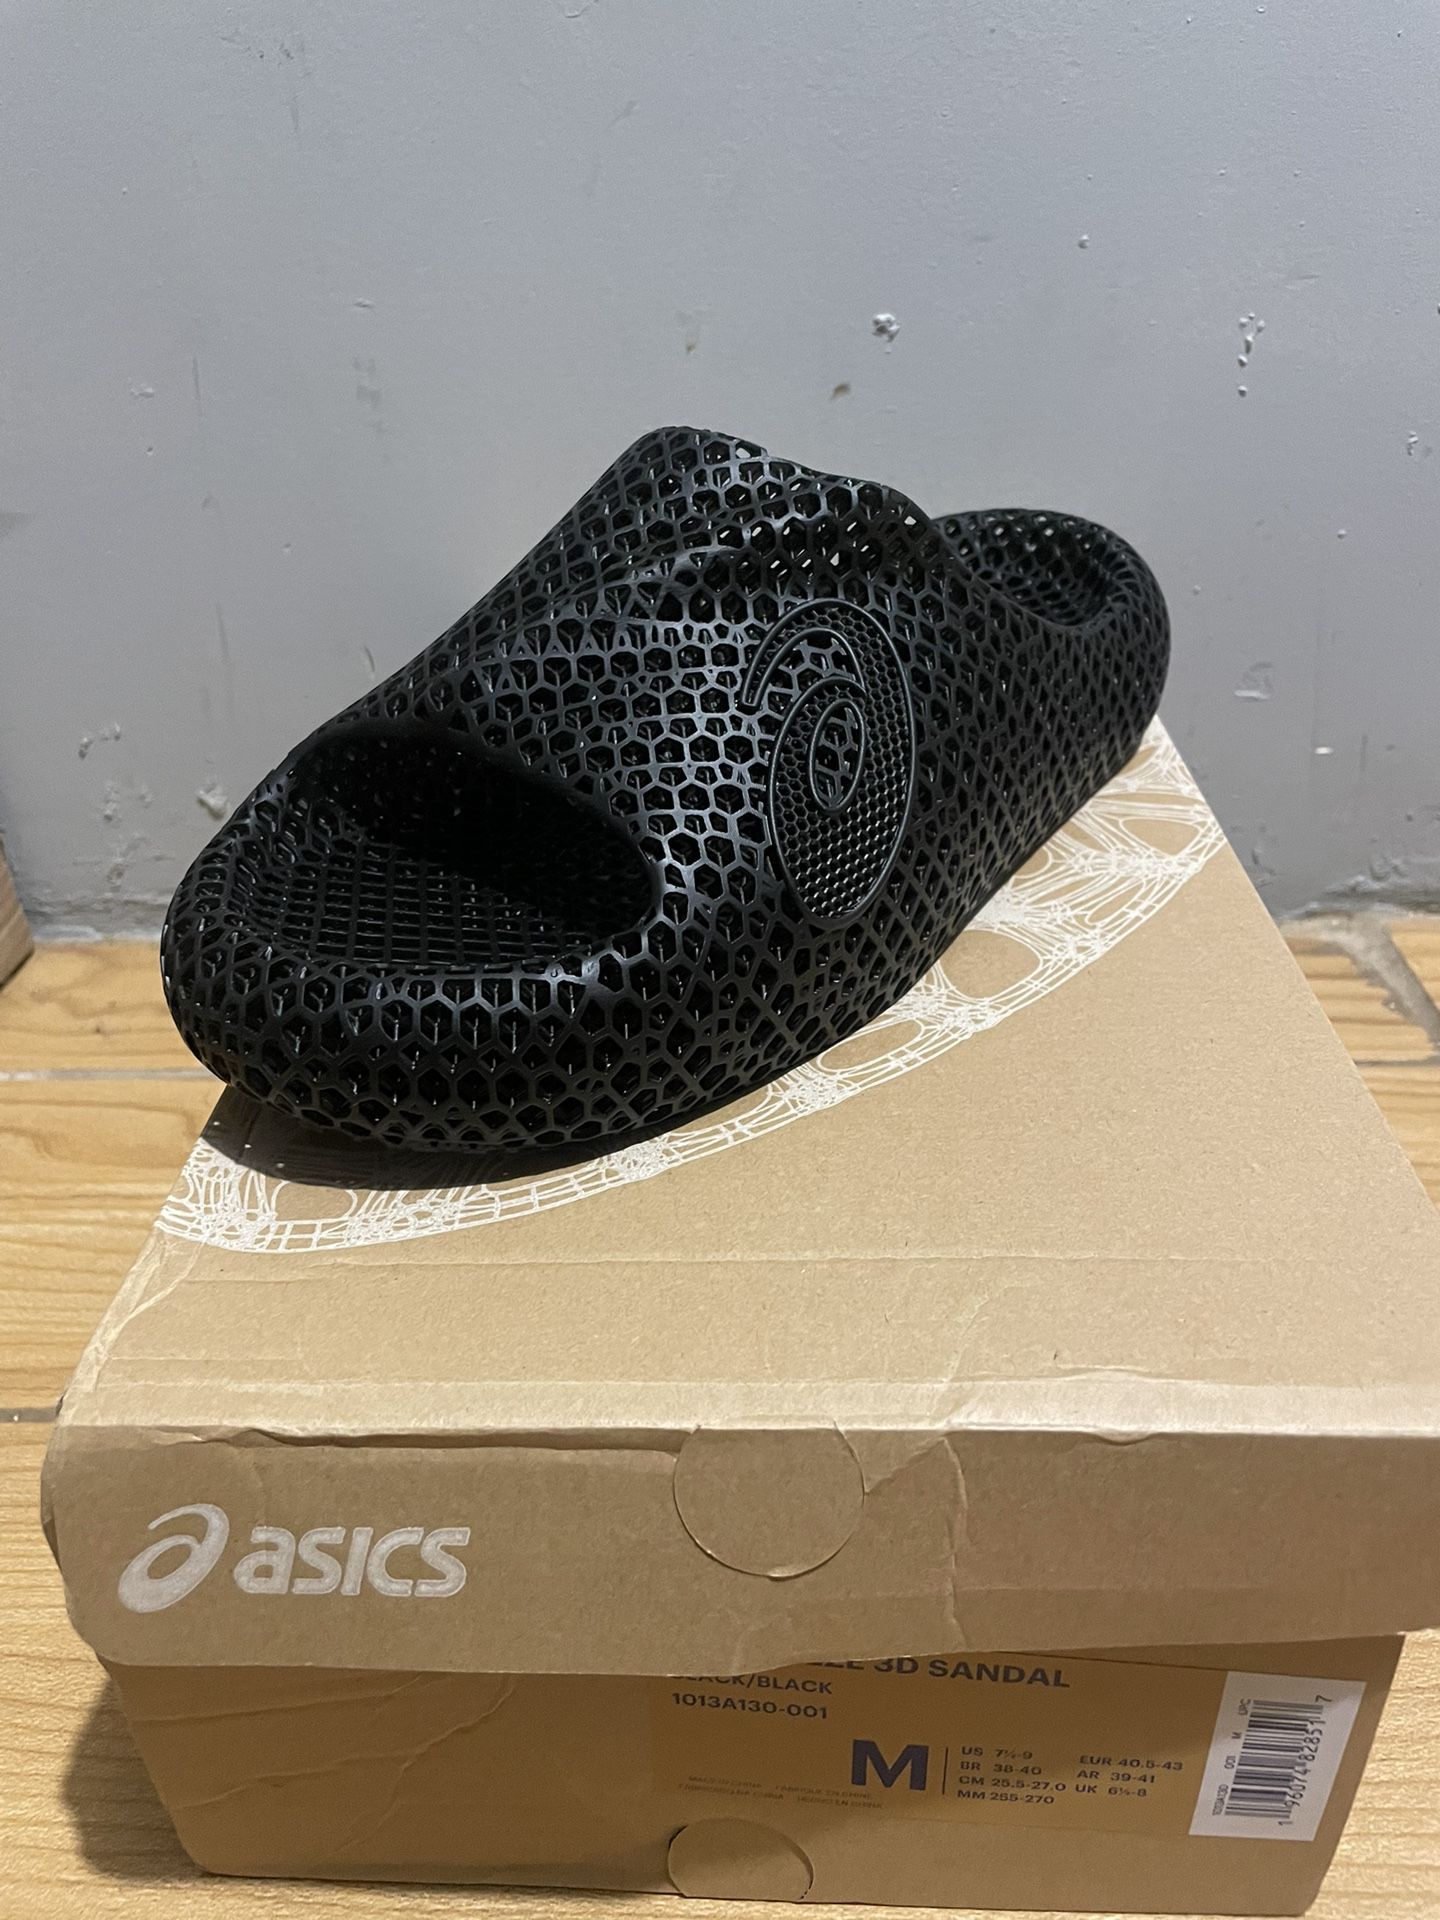 Asics Actibreeze 3D Sandal Slipper Size Sz M 7.5-9 Black for Sale